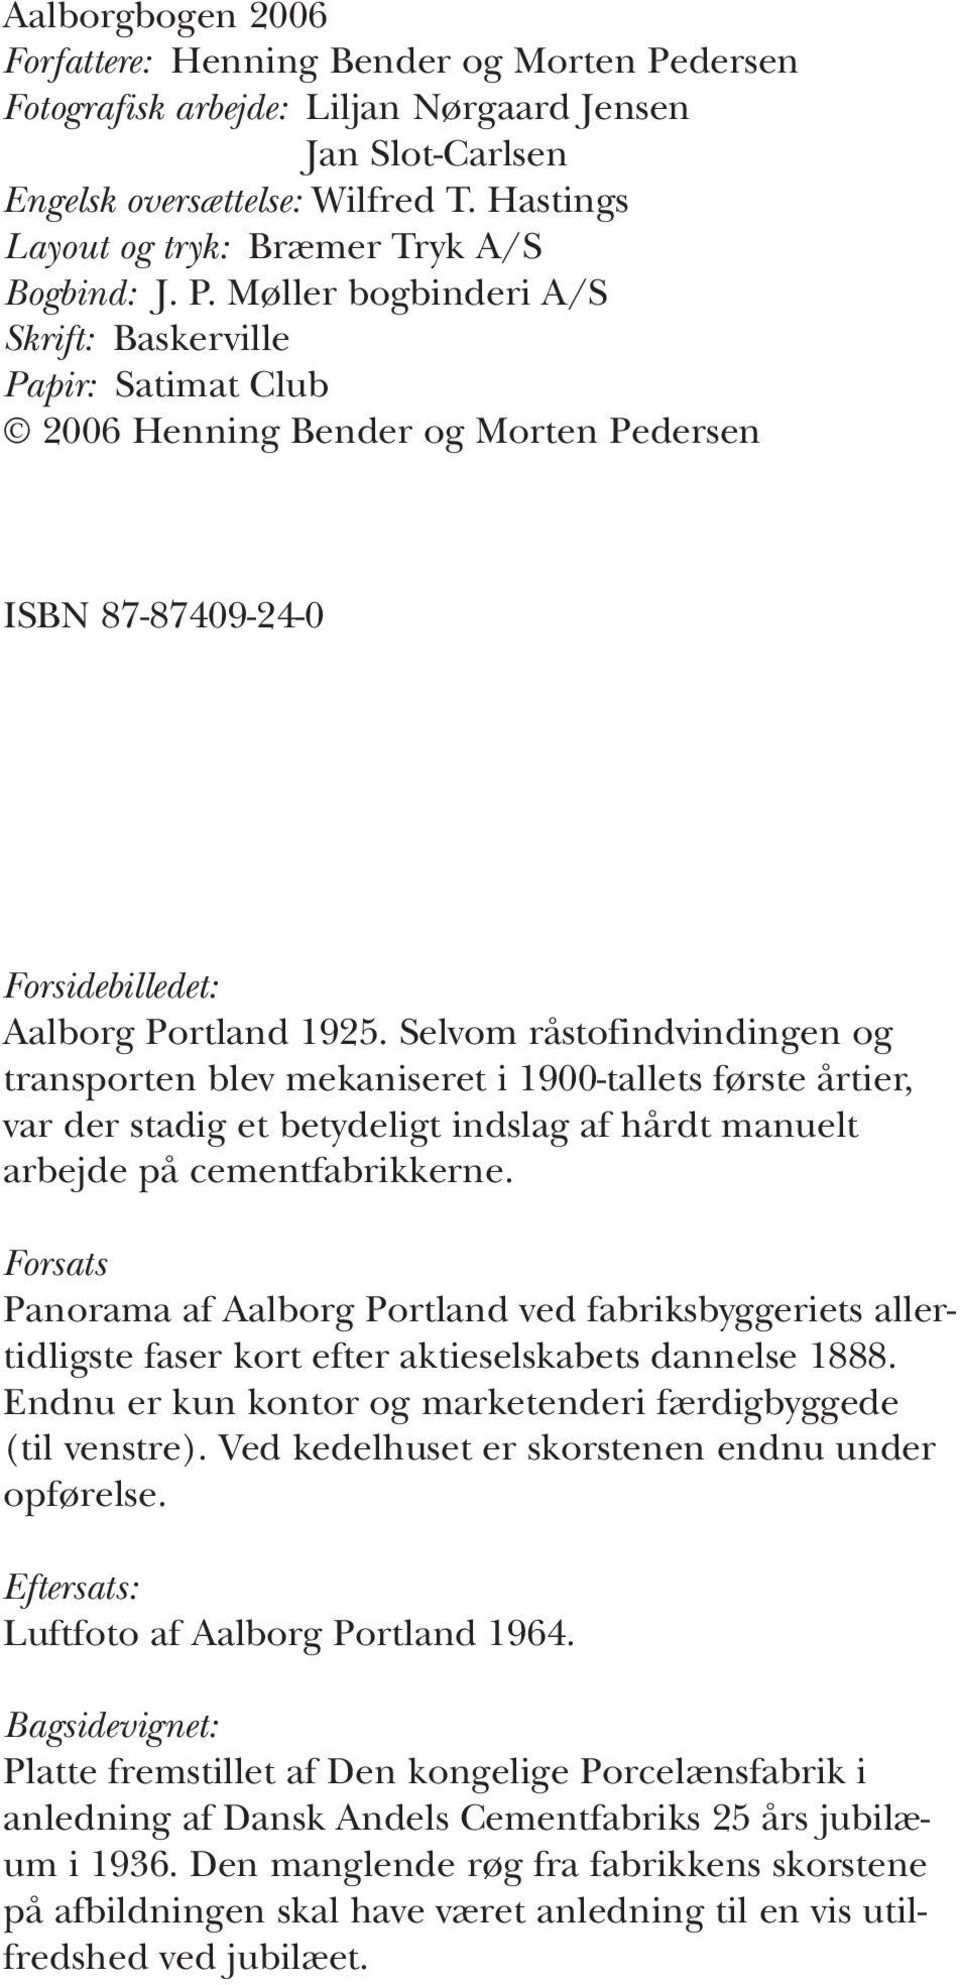 Møller bogbinderi A/S Skrift: Baskerville Papir: Satimat Club 2006 Henning Bender og Morten Pedersen ISBN 87-87409-24-0 Forsidebilledet: Aalborg Portland 1925.